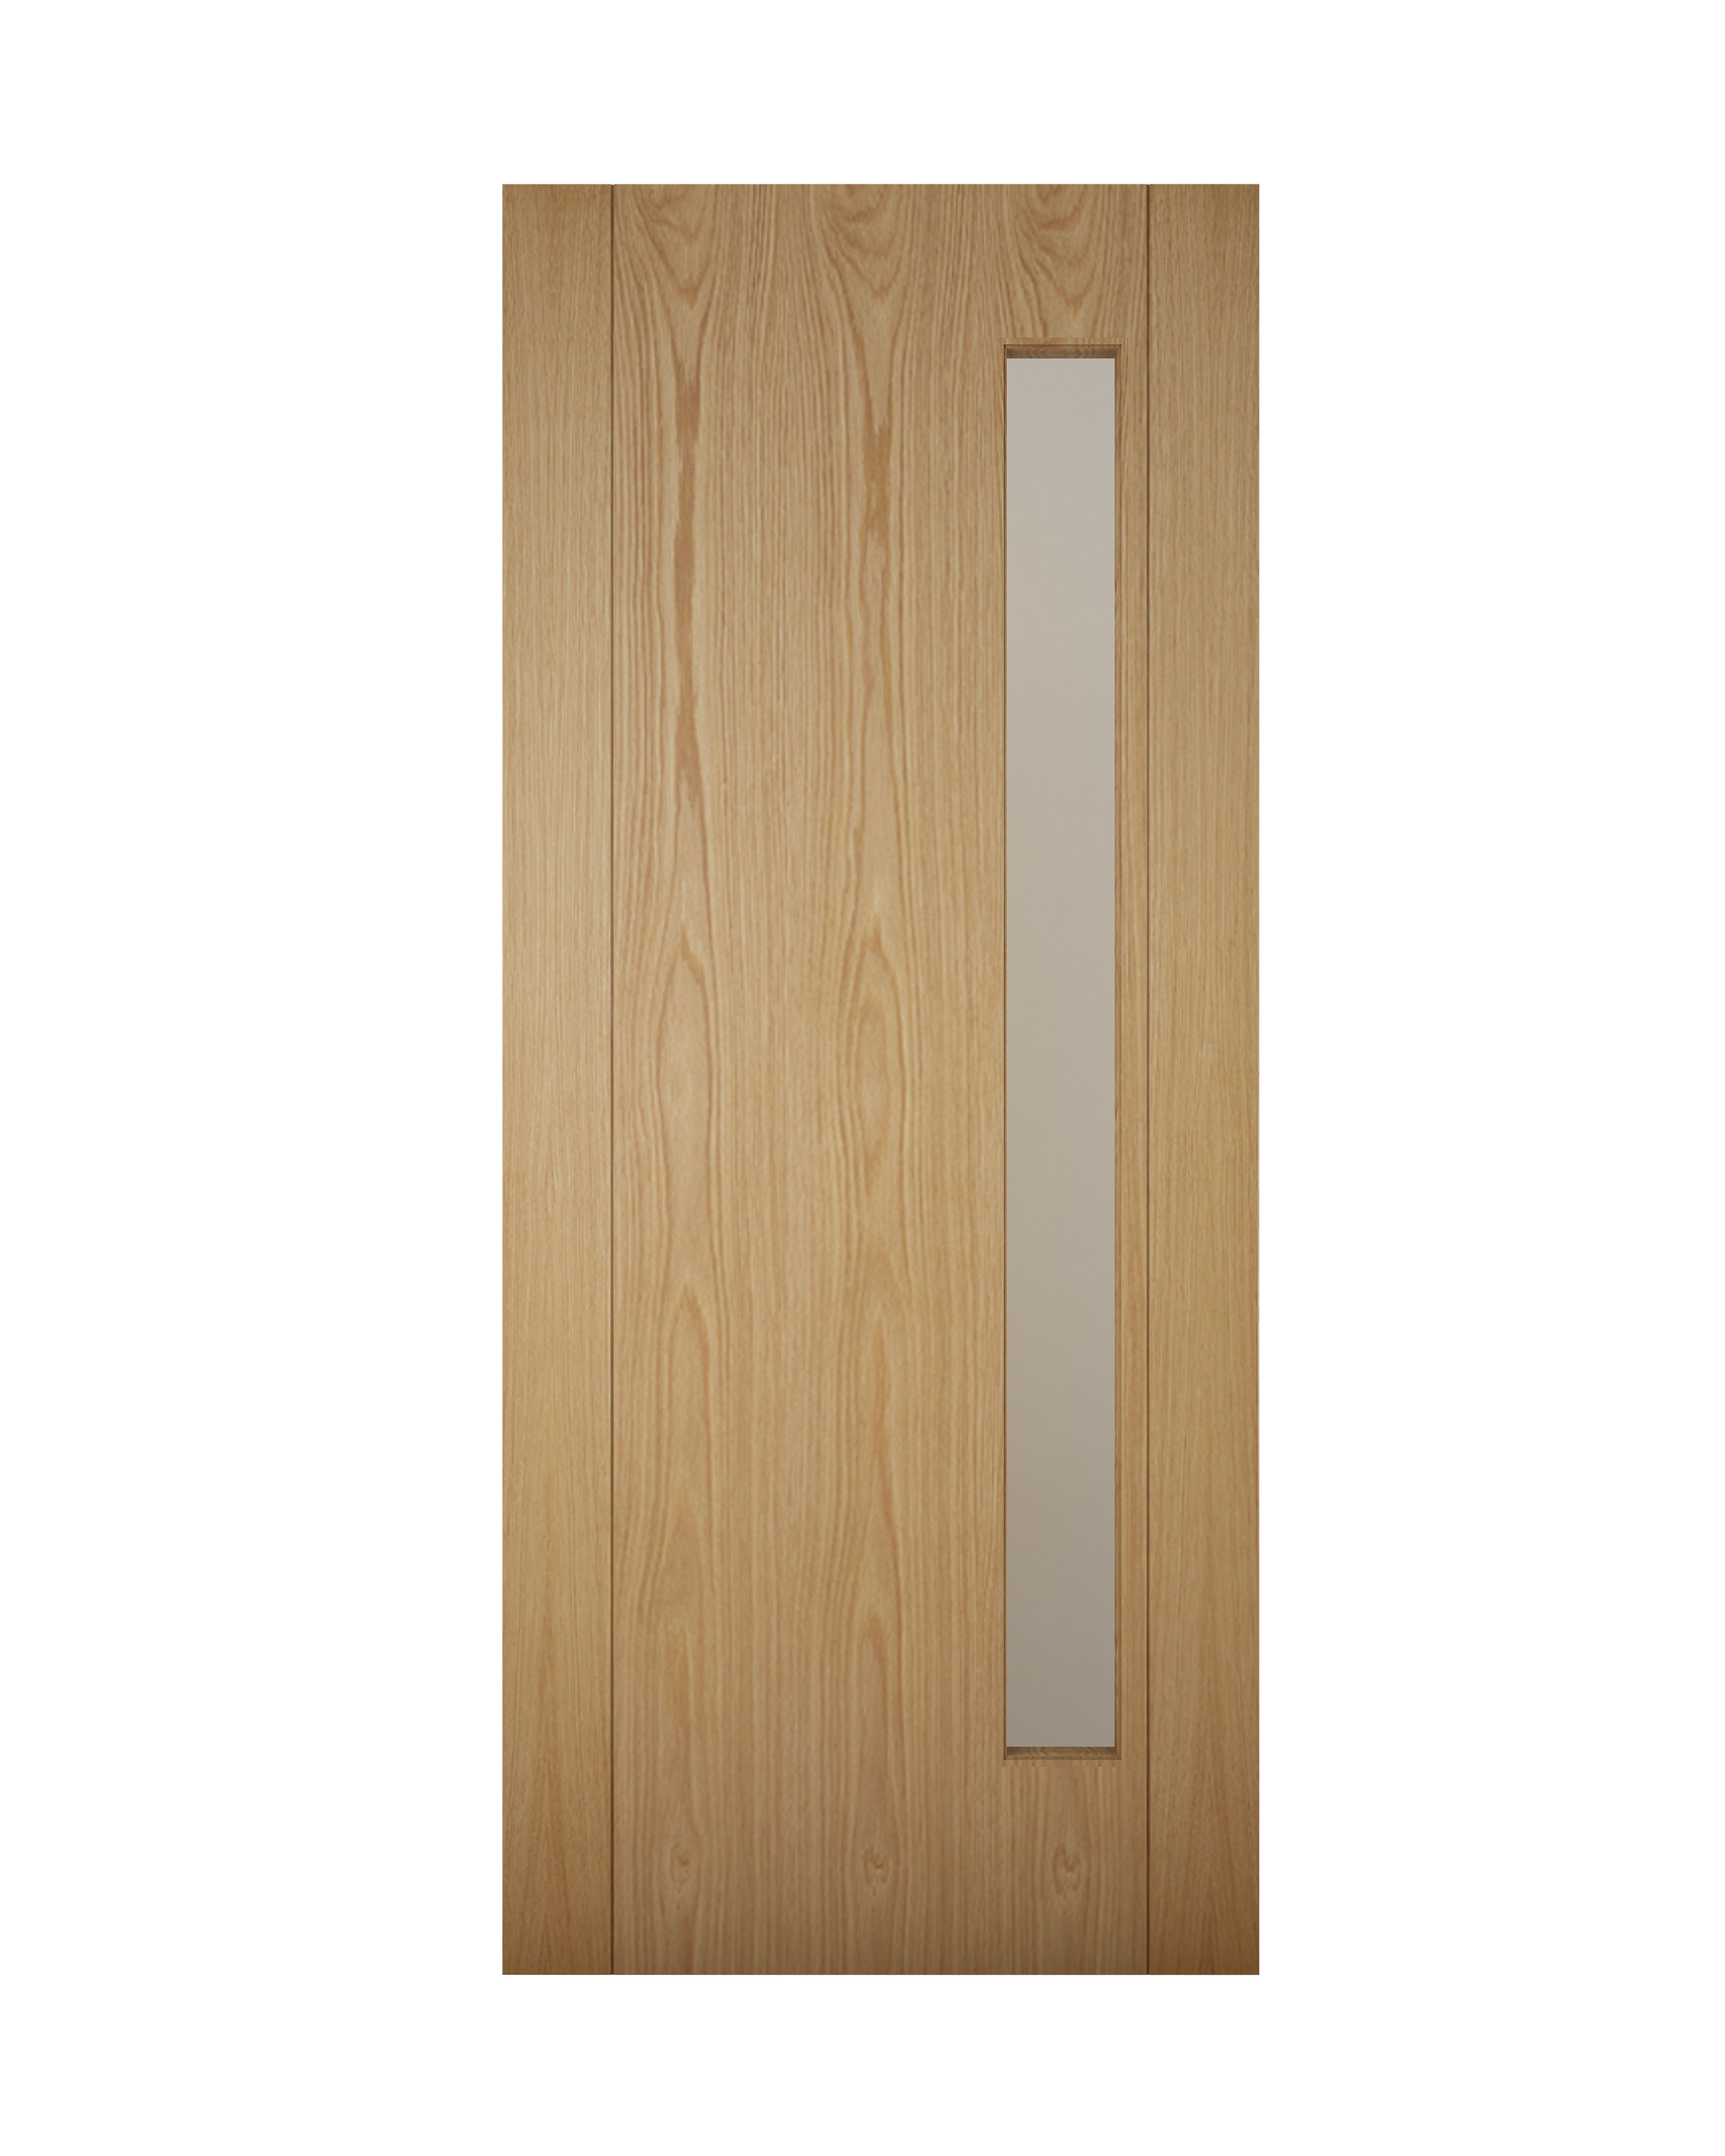 Glazed White oak veneer Left & RHed Front Door set, (H)2074mm (W)932mm